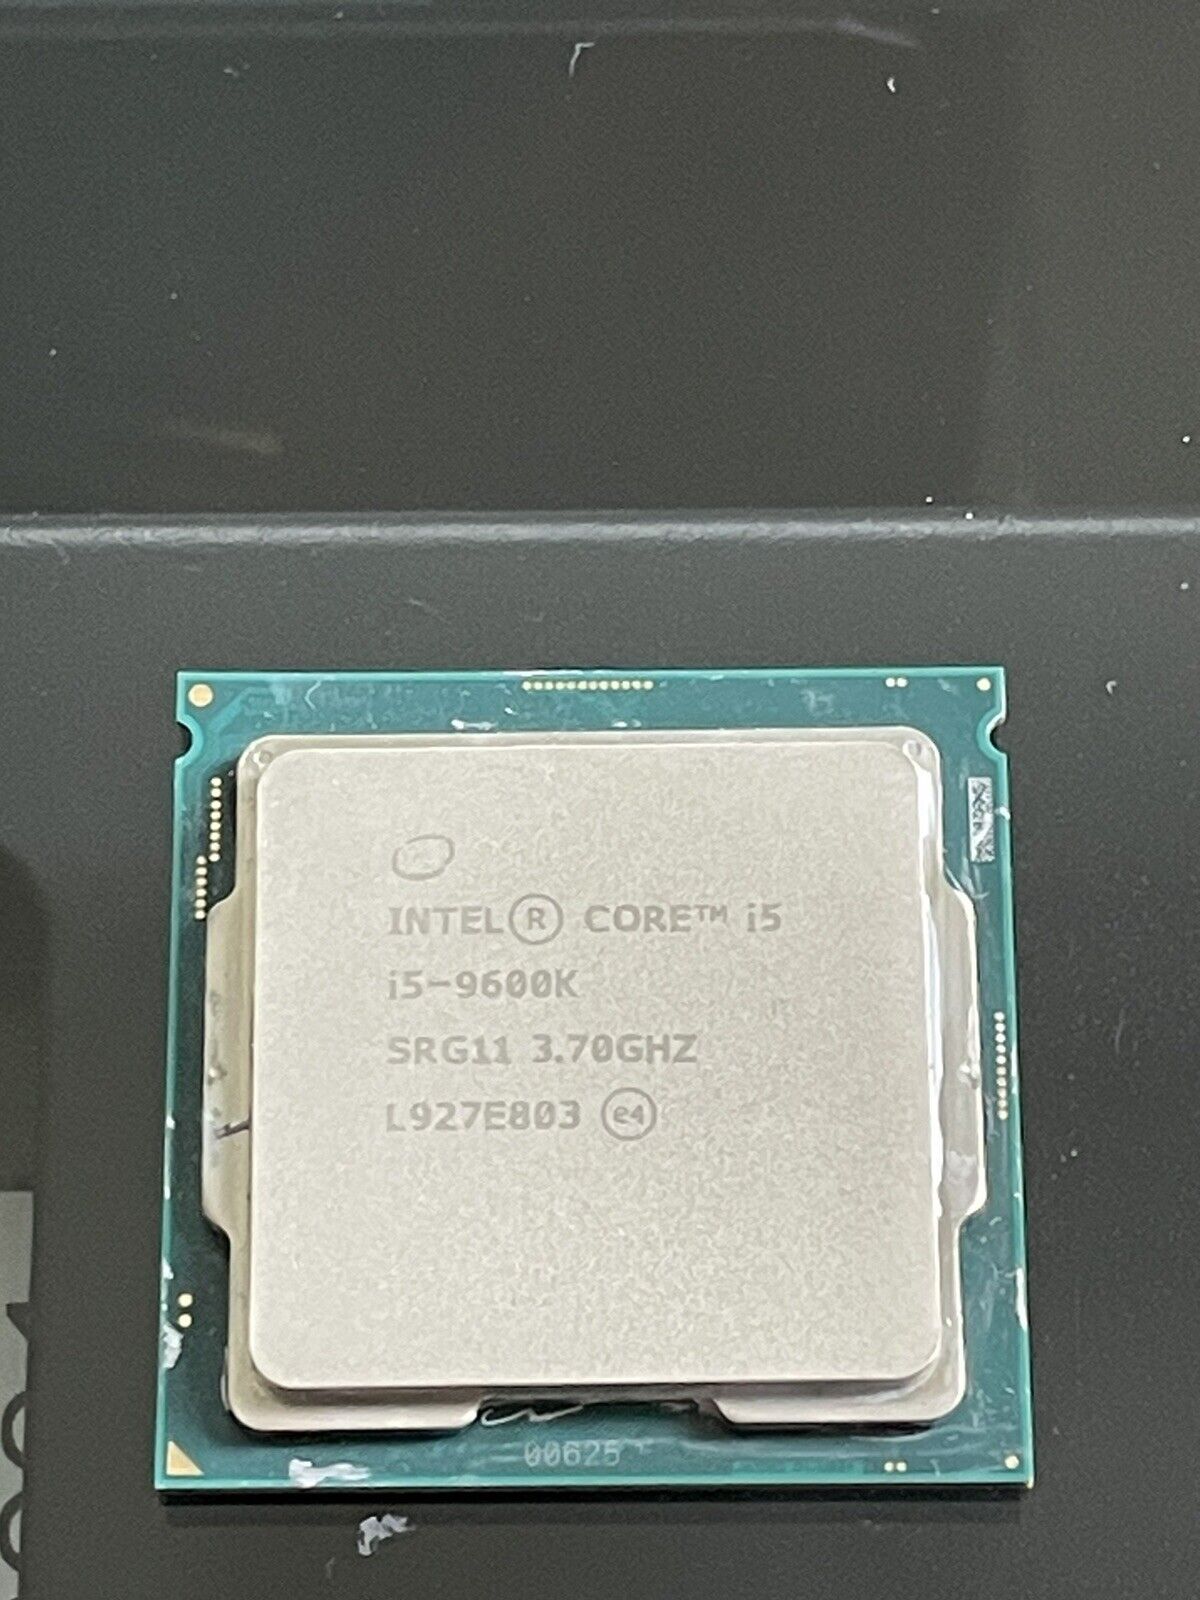 Intel Core i5-9600K 6-Core Processor (SRG11)